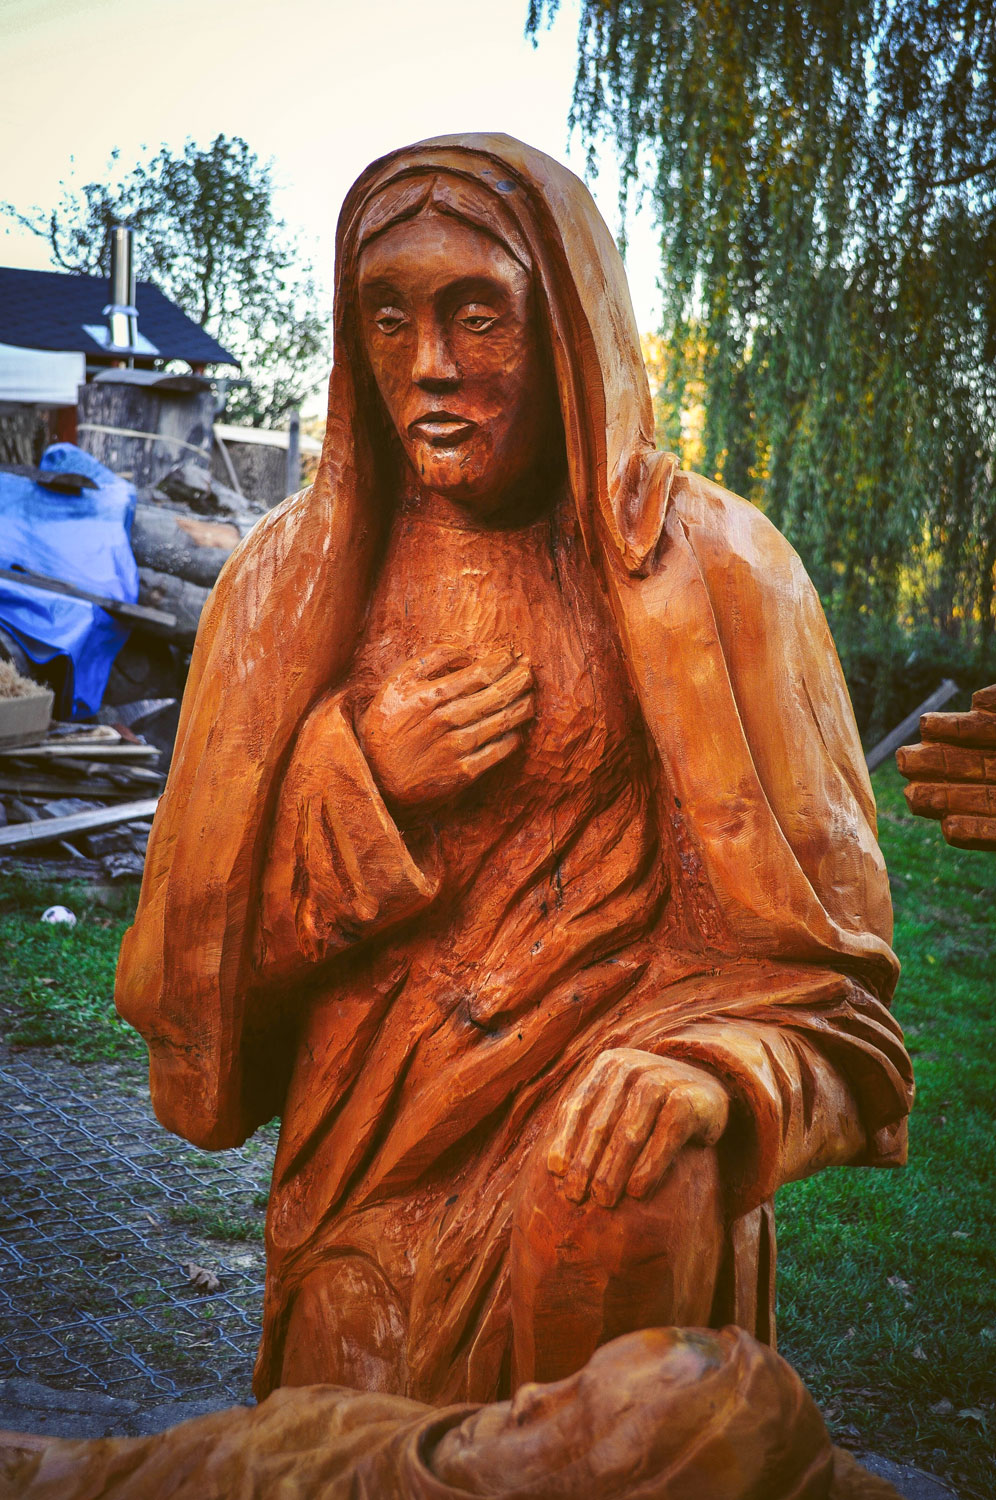 drevorezba-vyrezavani-carving-wood-drevo-socha-figura-betlem_jeslicky-radekzdrazil-20221028-11